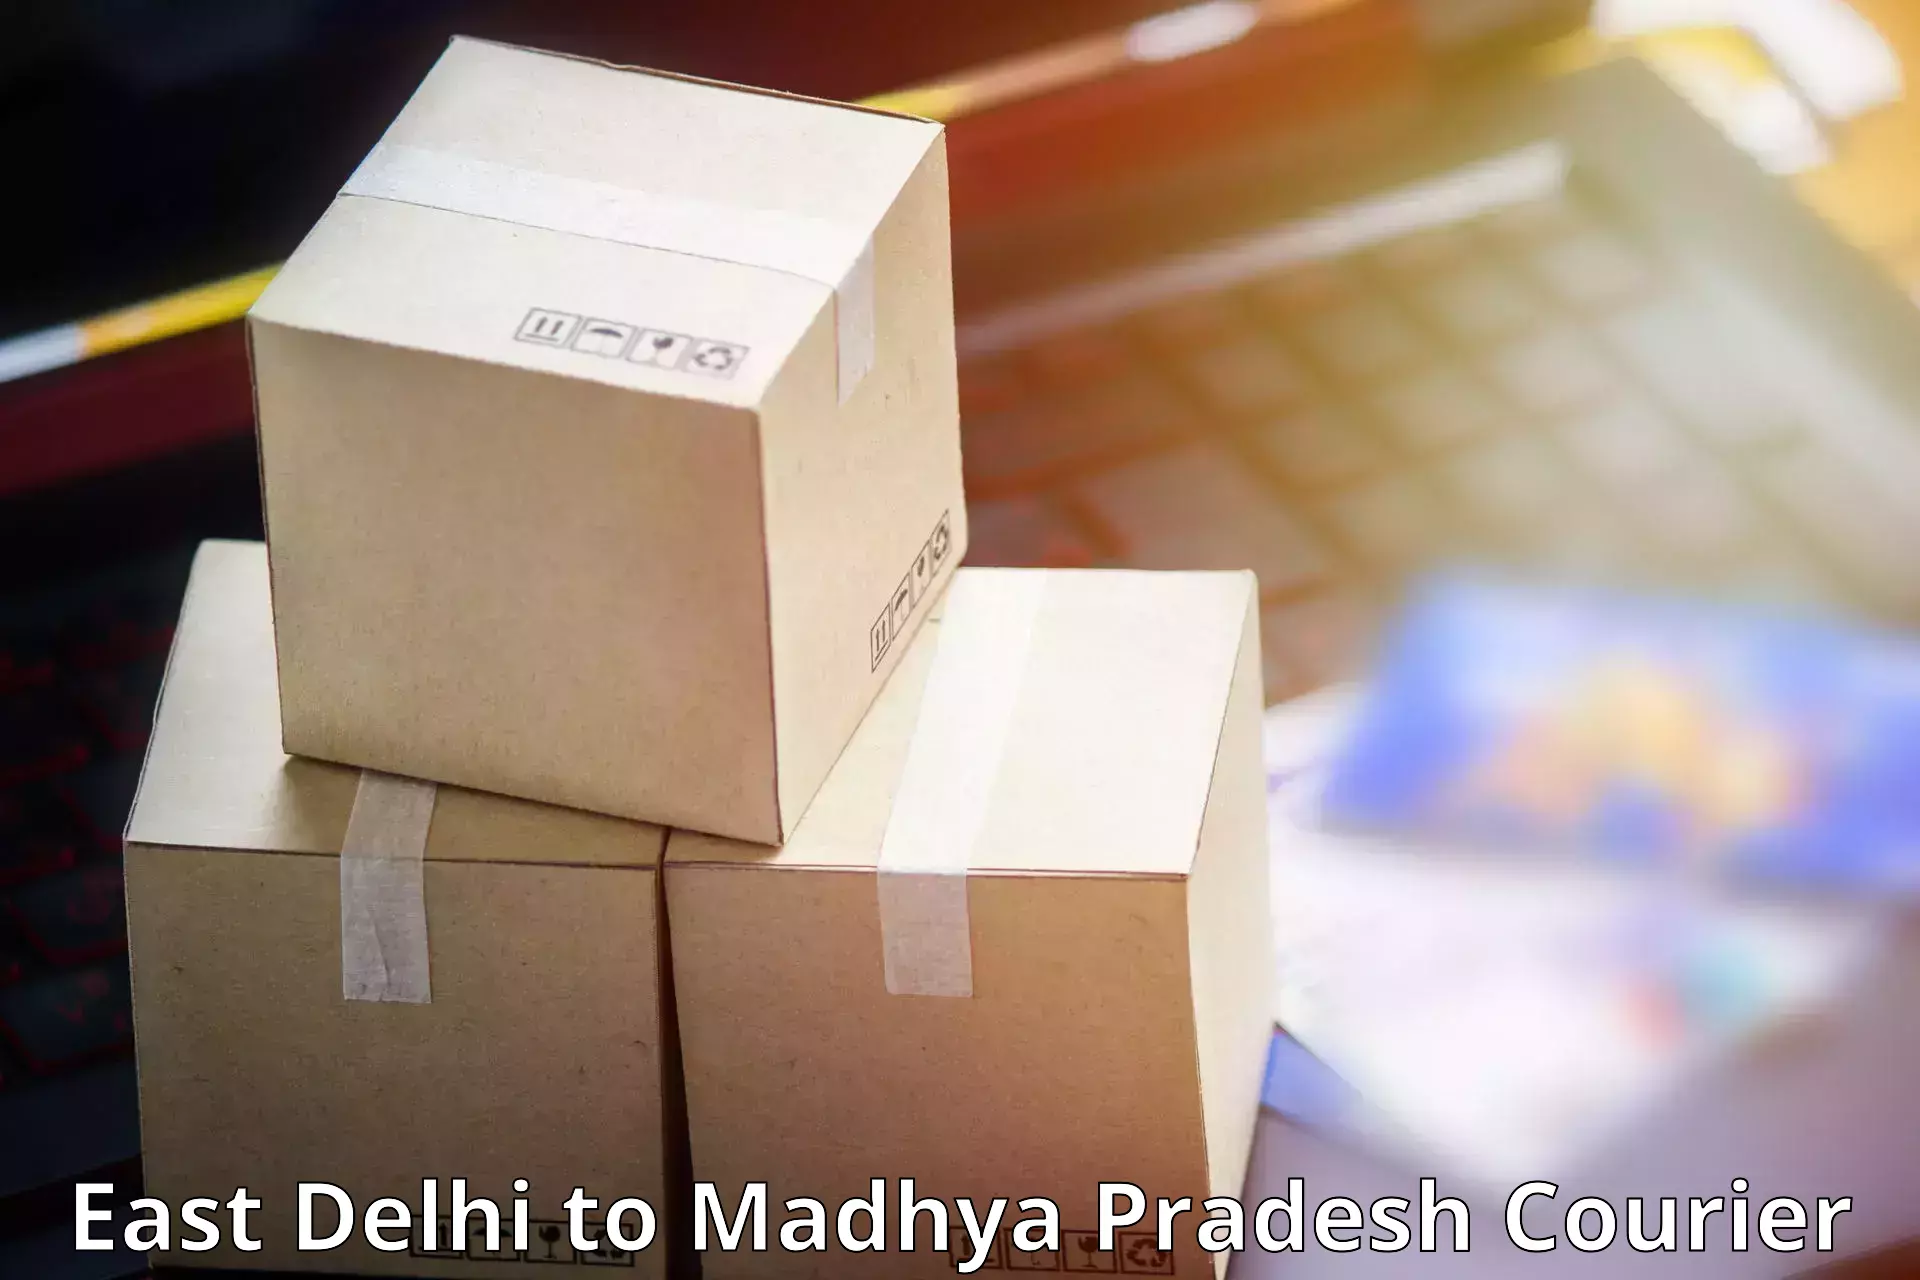 Urgent courier needs East Delhi to Ganj Basoda